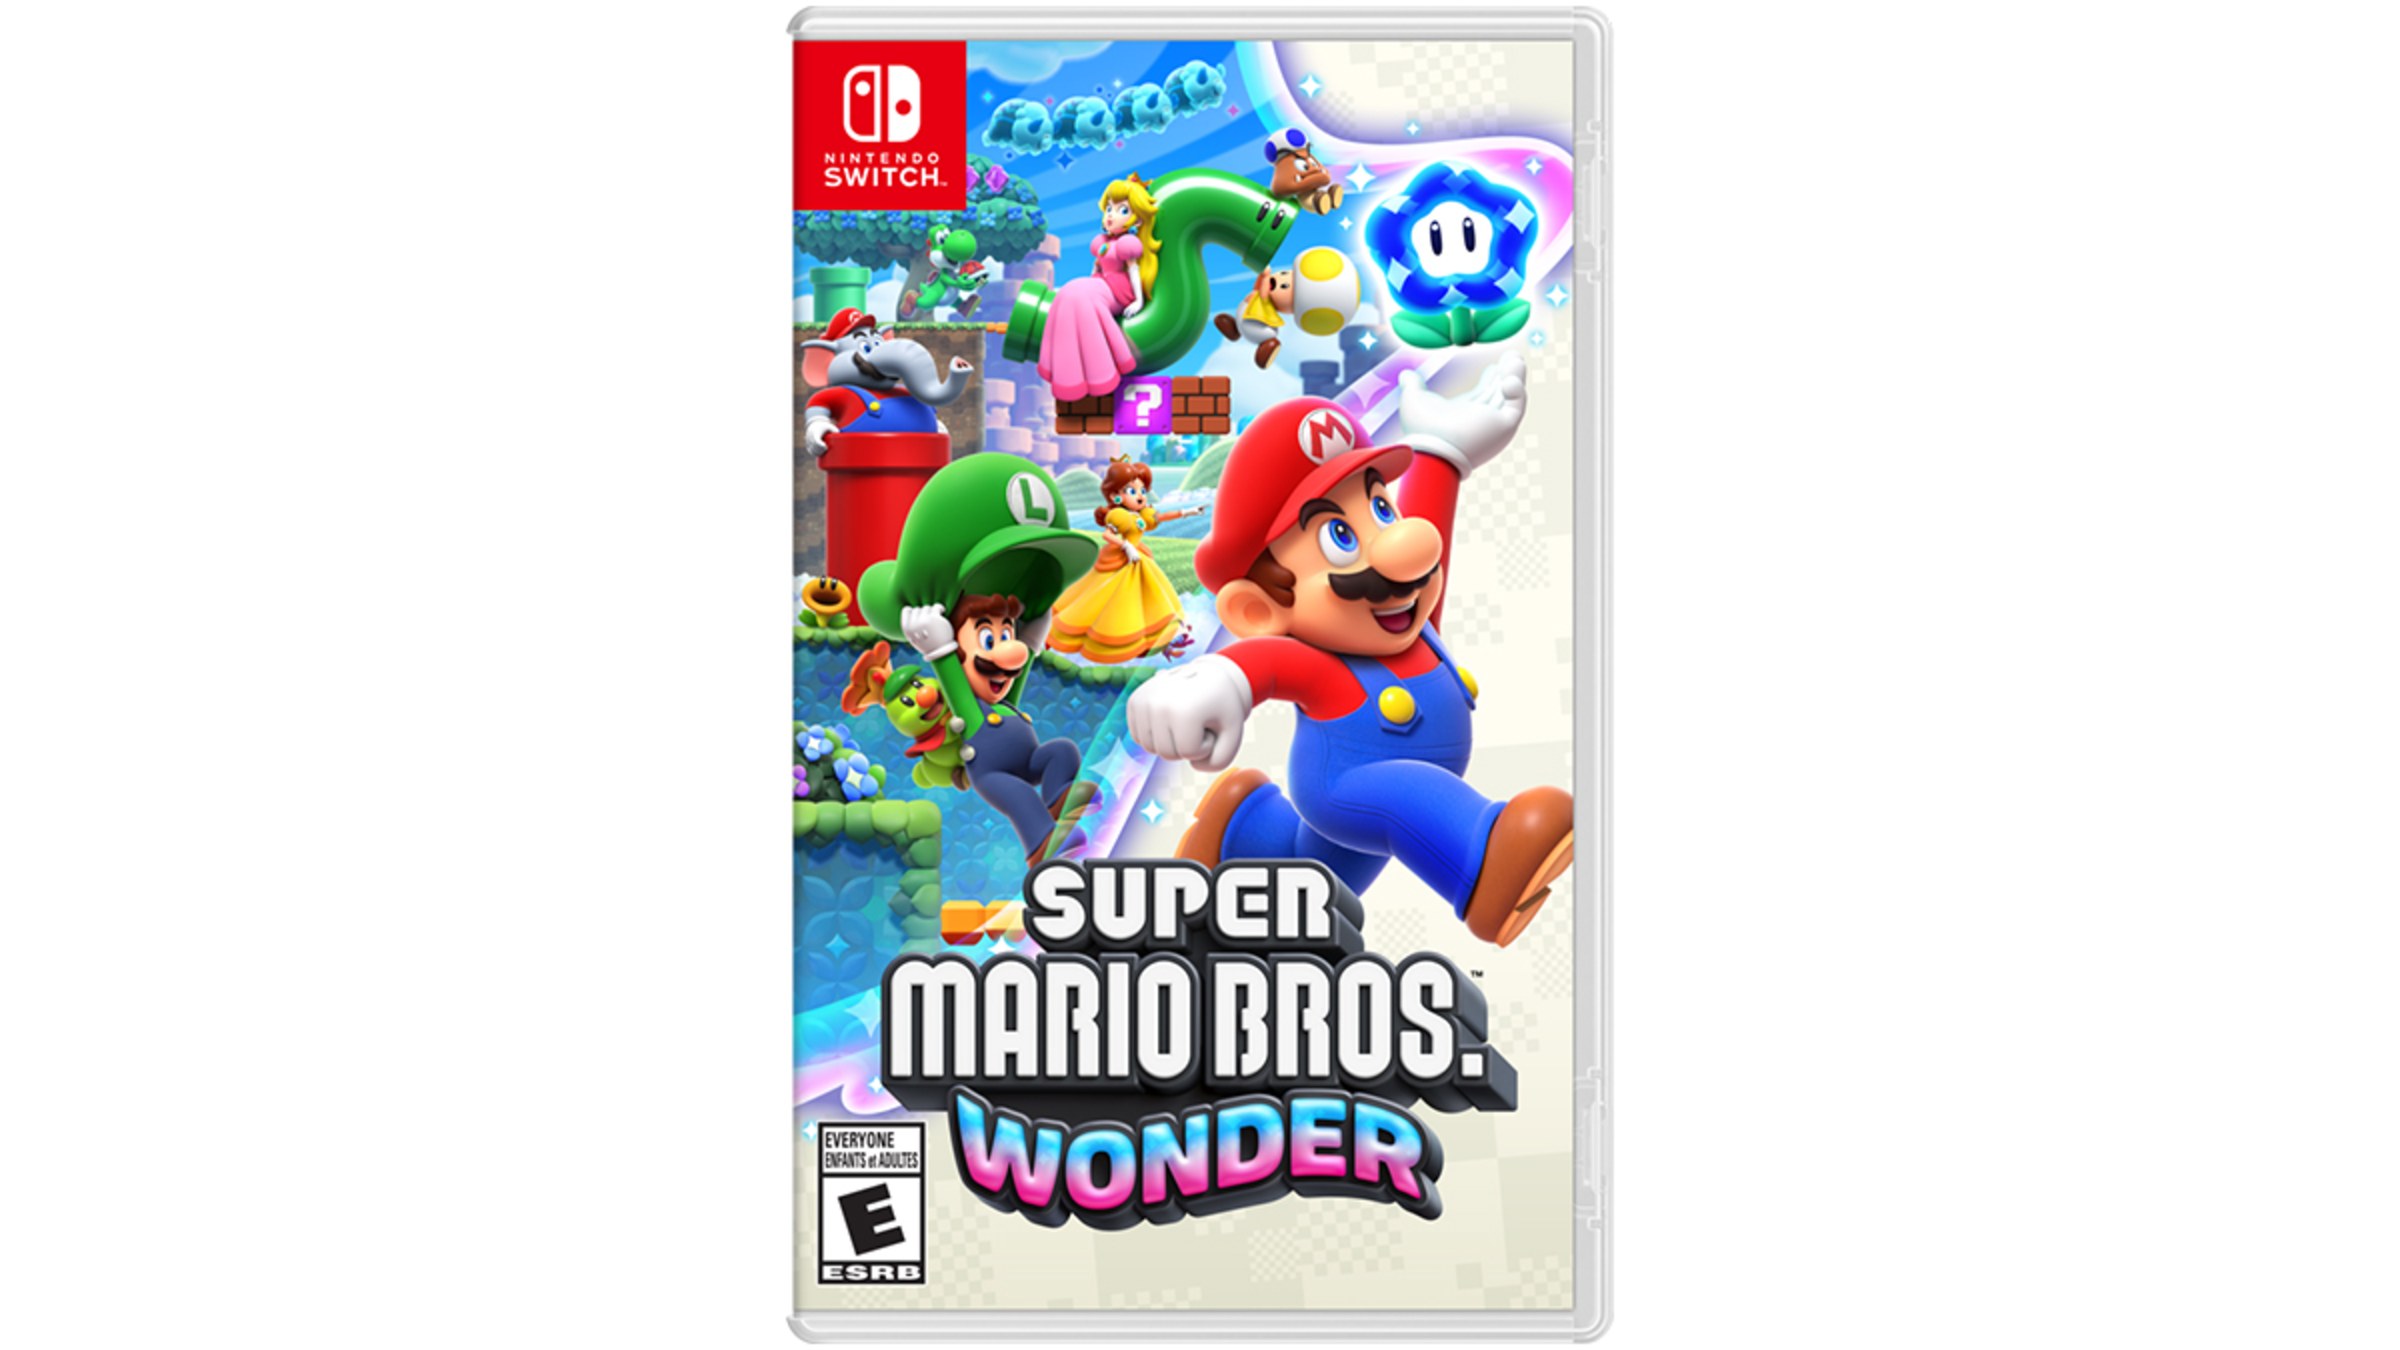 Super Mario Bros Wonder - Nintendo Switch/CGC GRADED 9.9 A++ SEALED/BRAND  NEW - Simpson Advanced Chiropractic & Medical Center